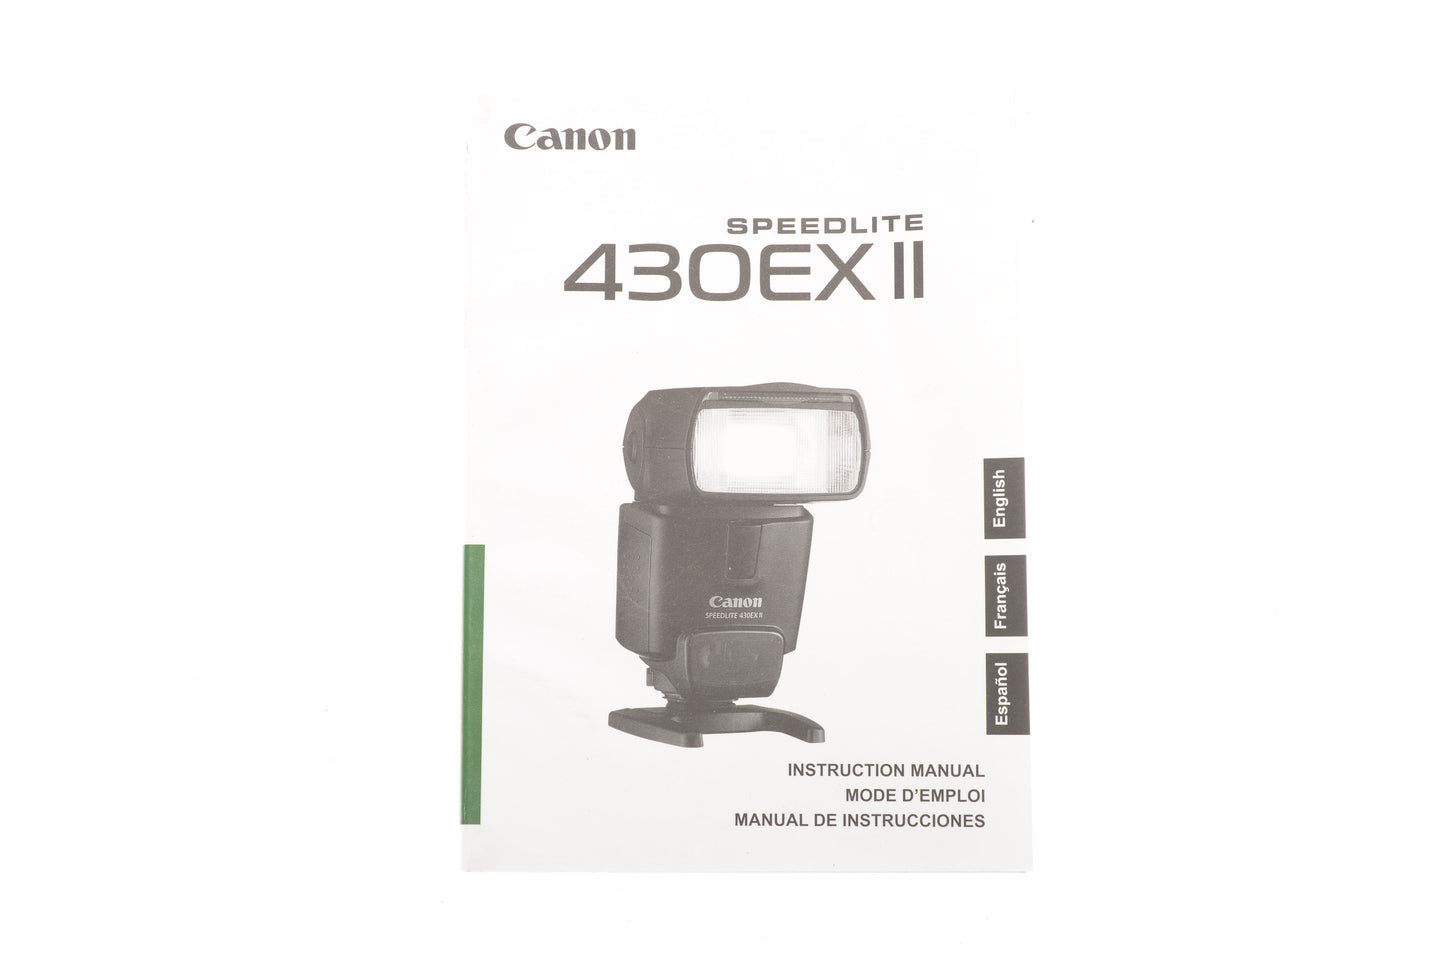 Canon 430EX II Speedlite Instructions - Accessory